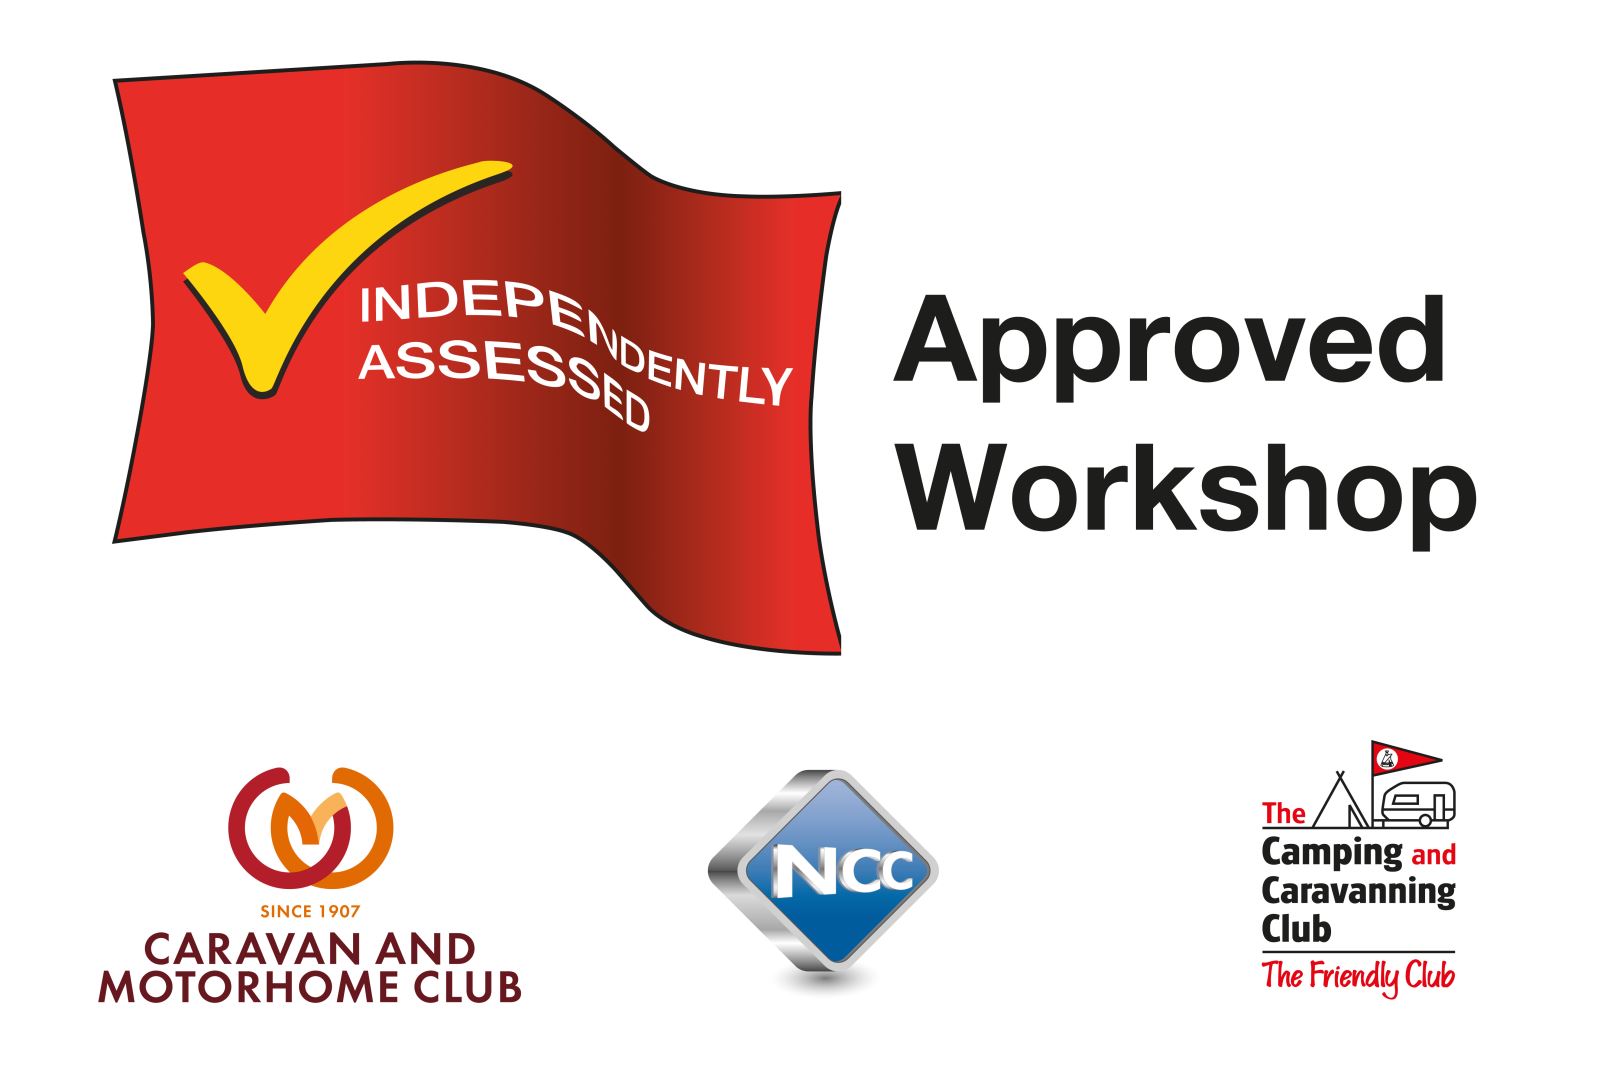 The Approved Workshop Scheme